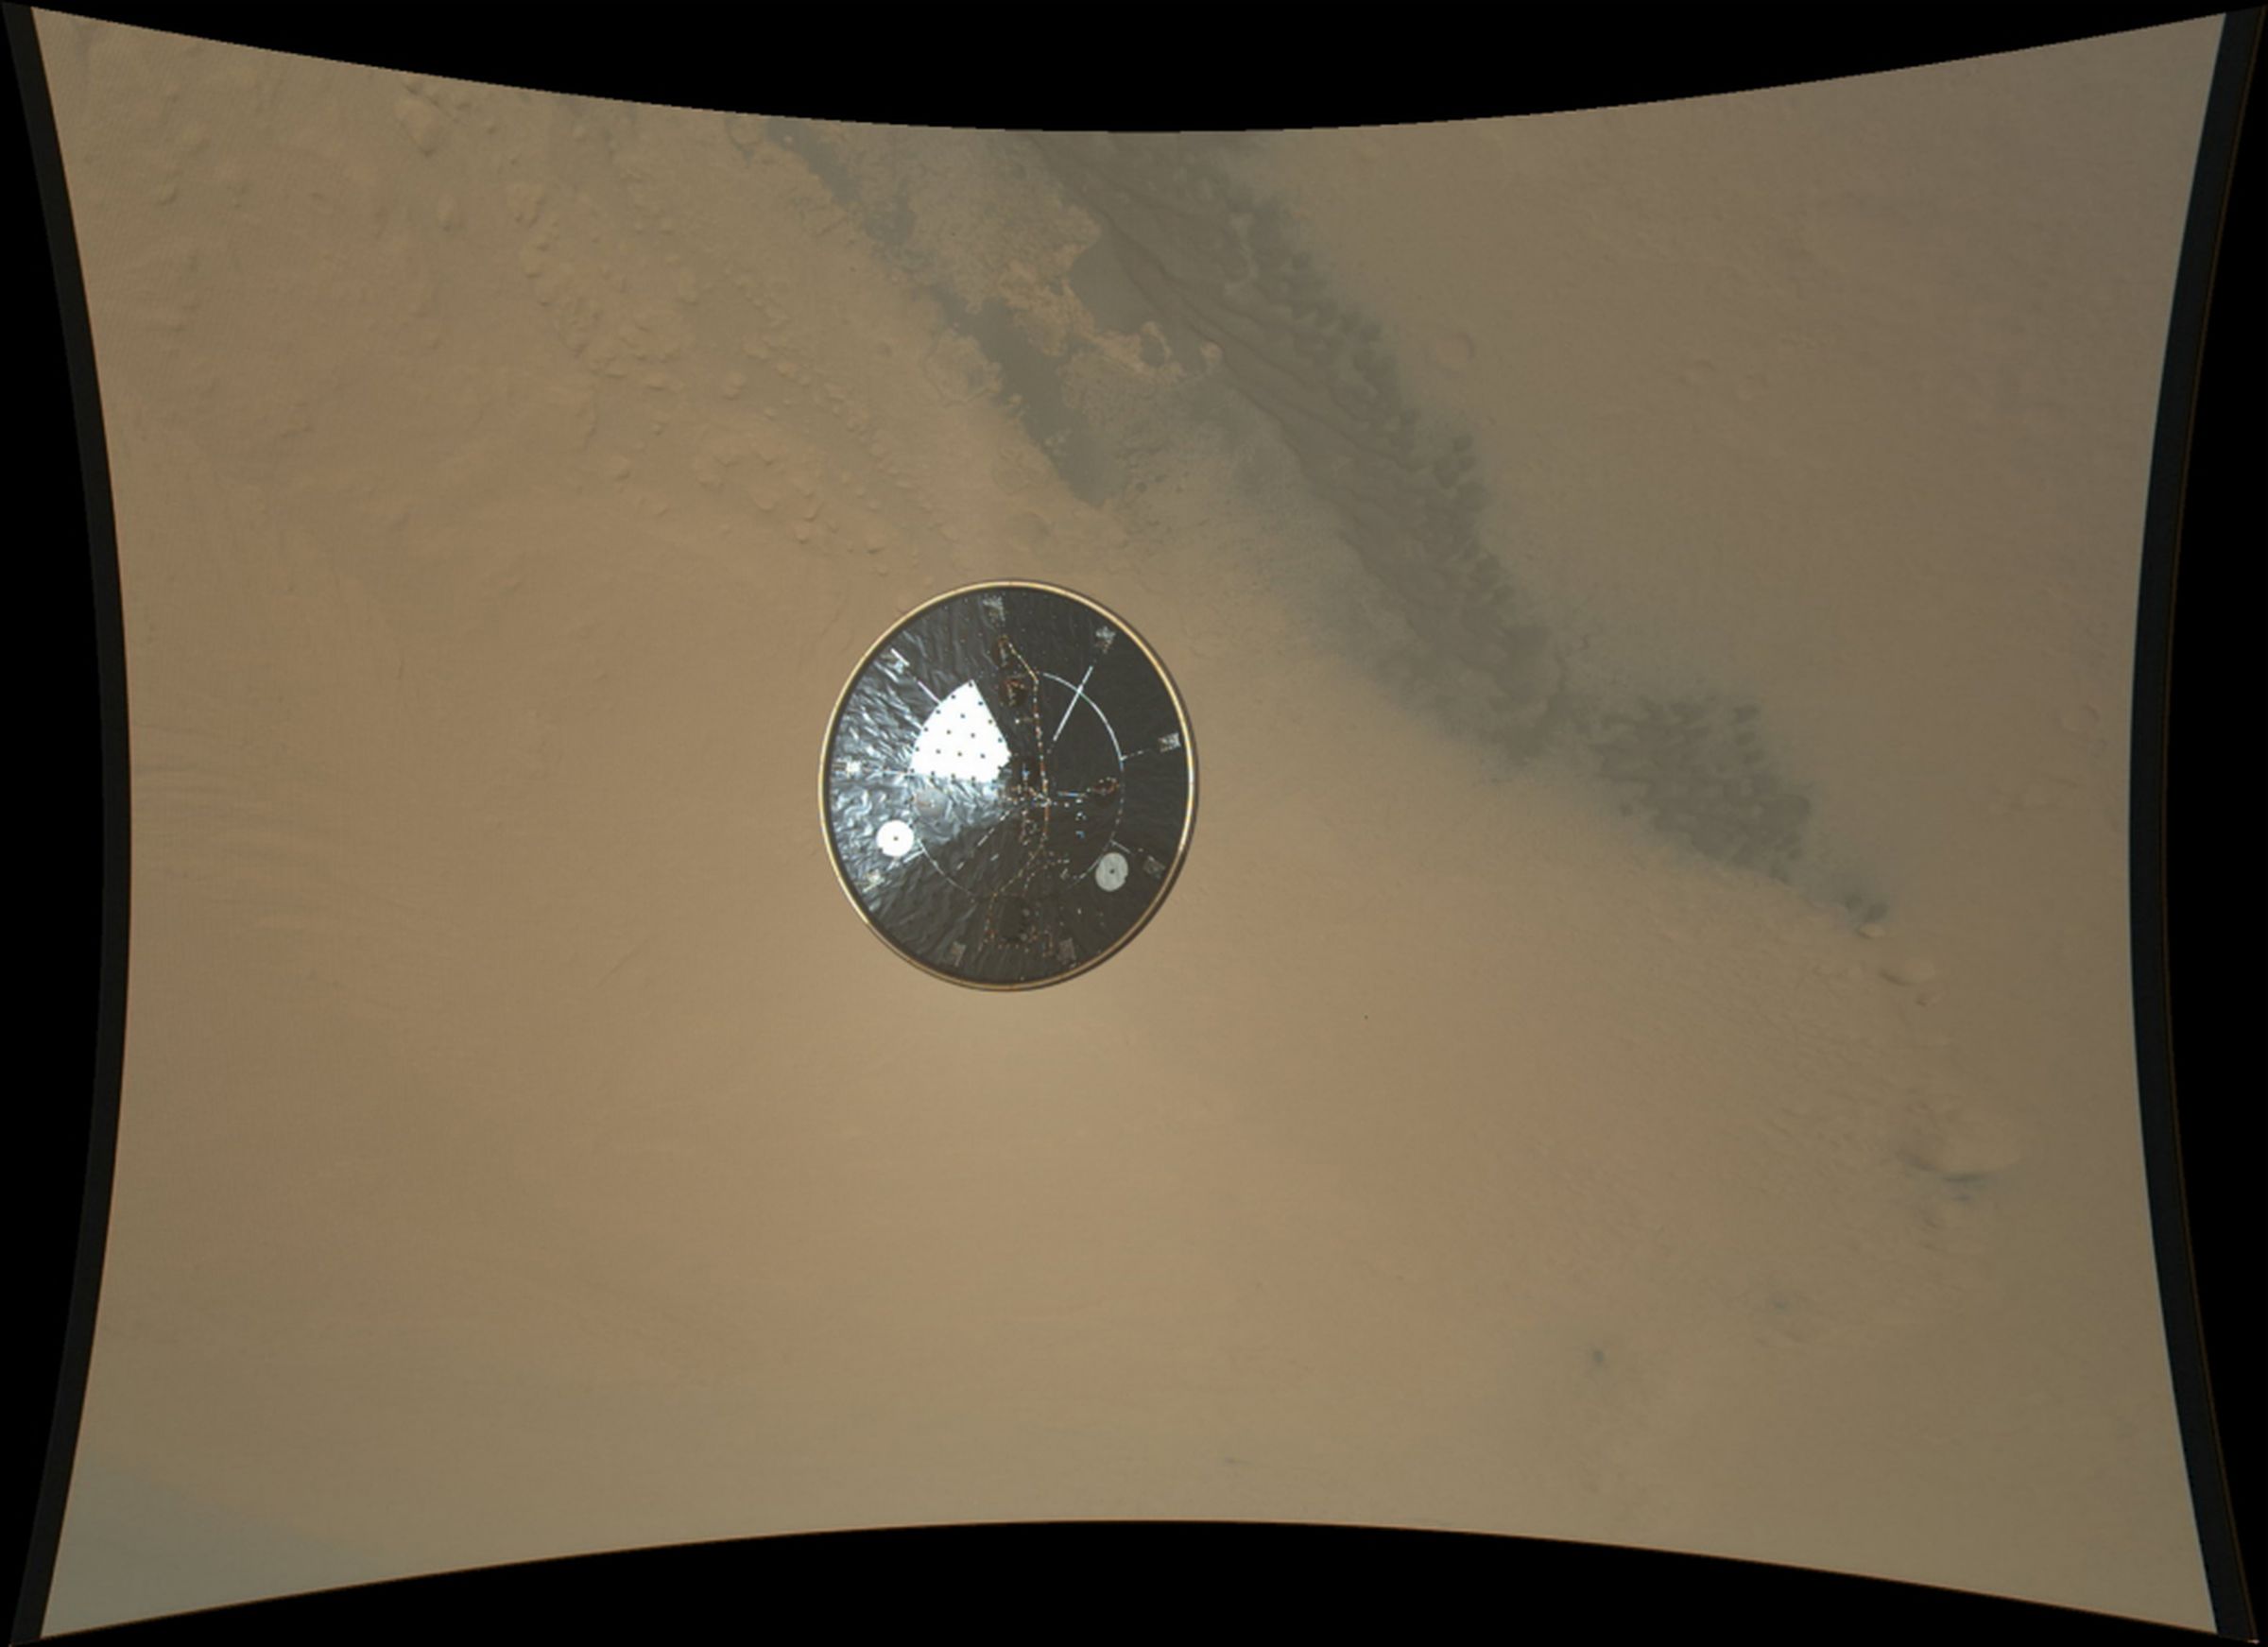 Mars photos from NASA's Curiosity rover 